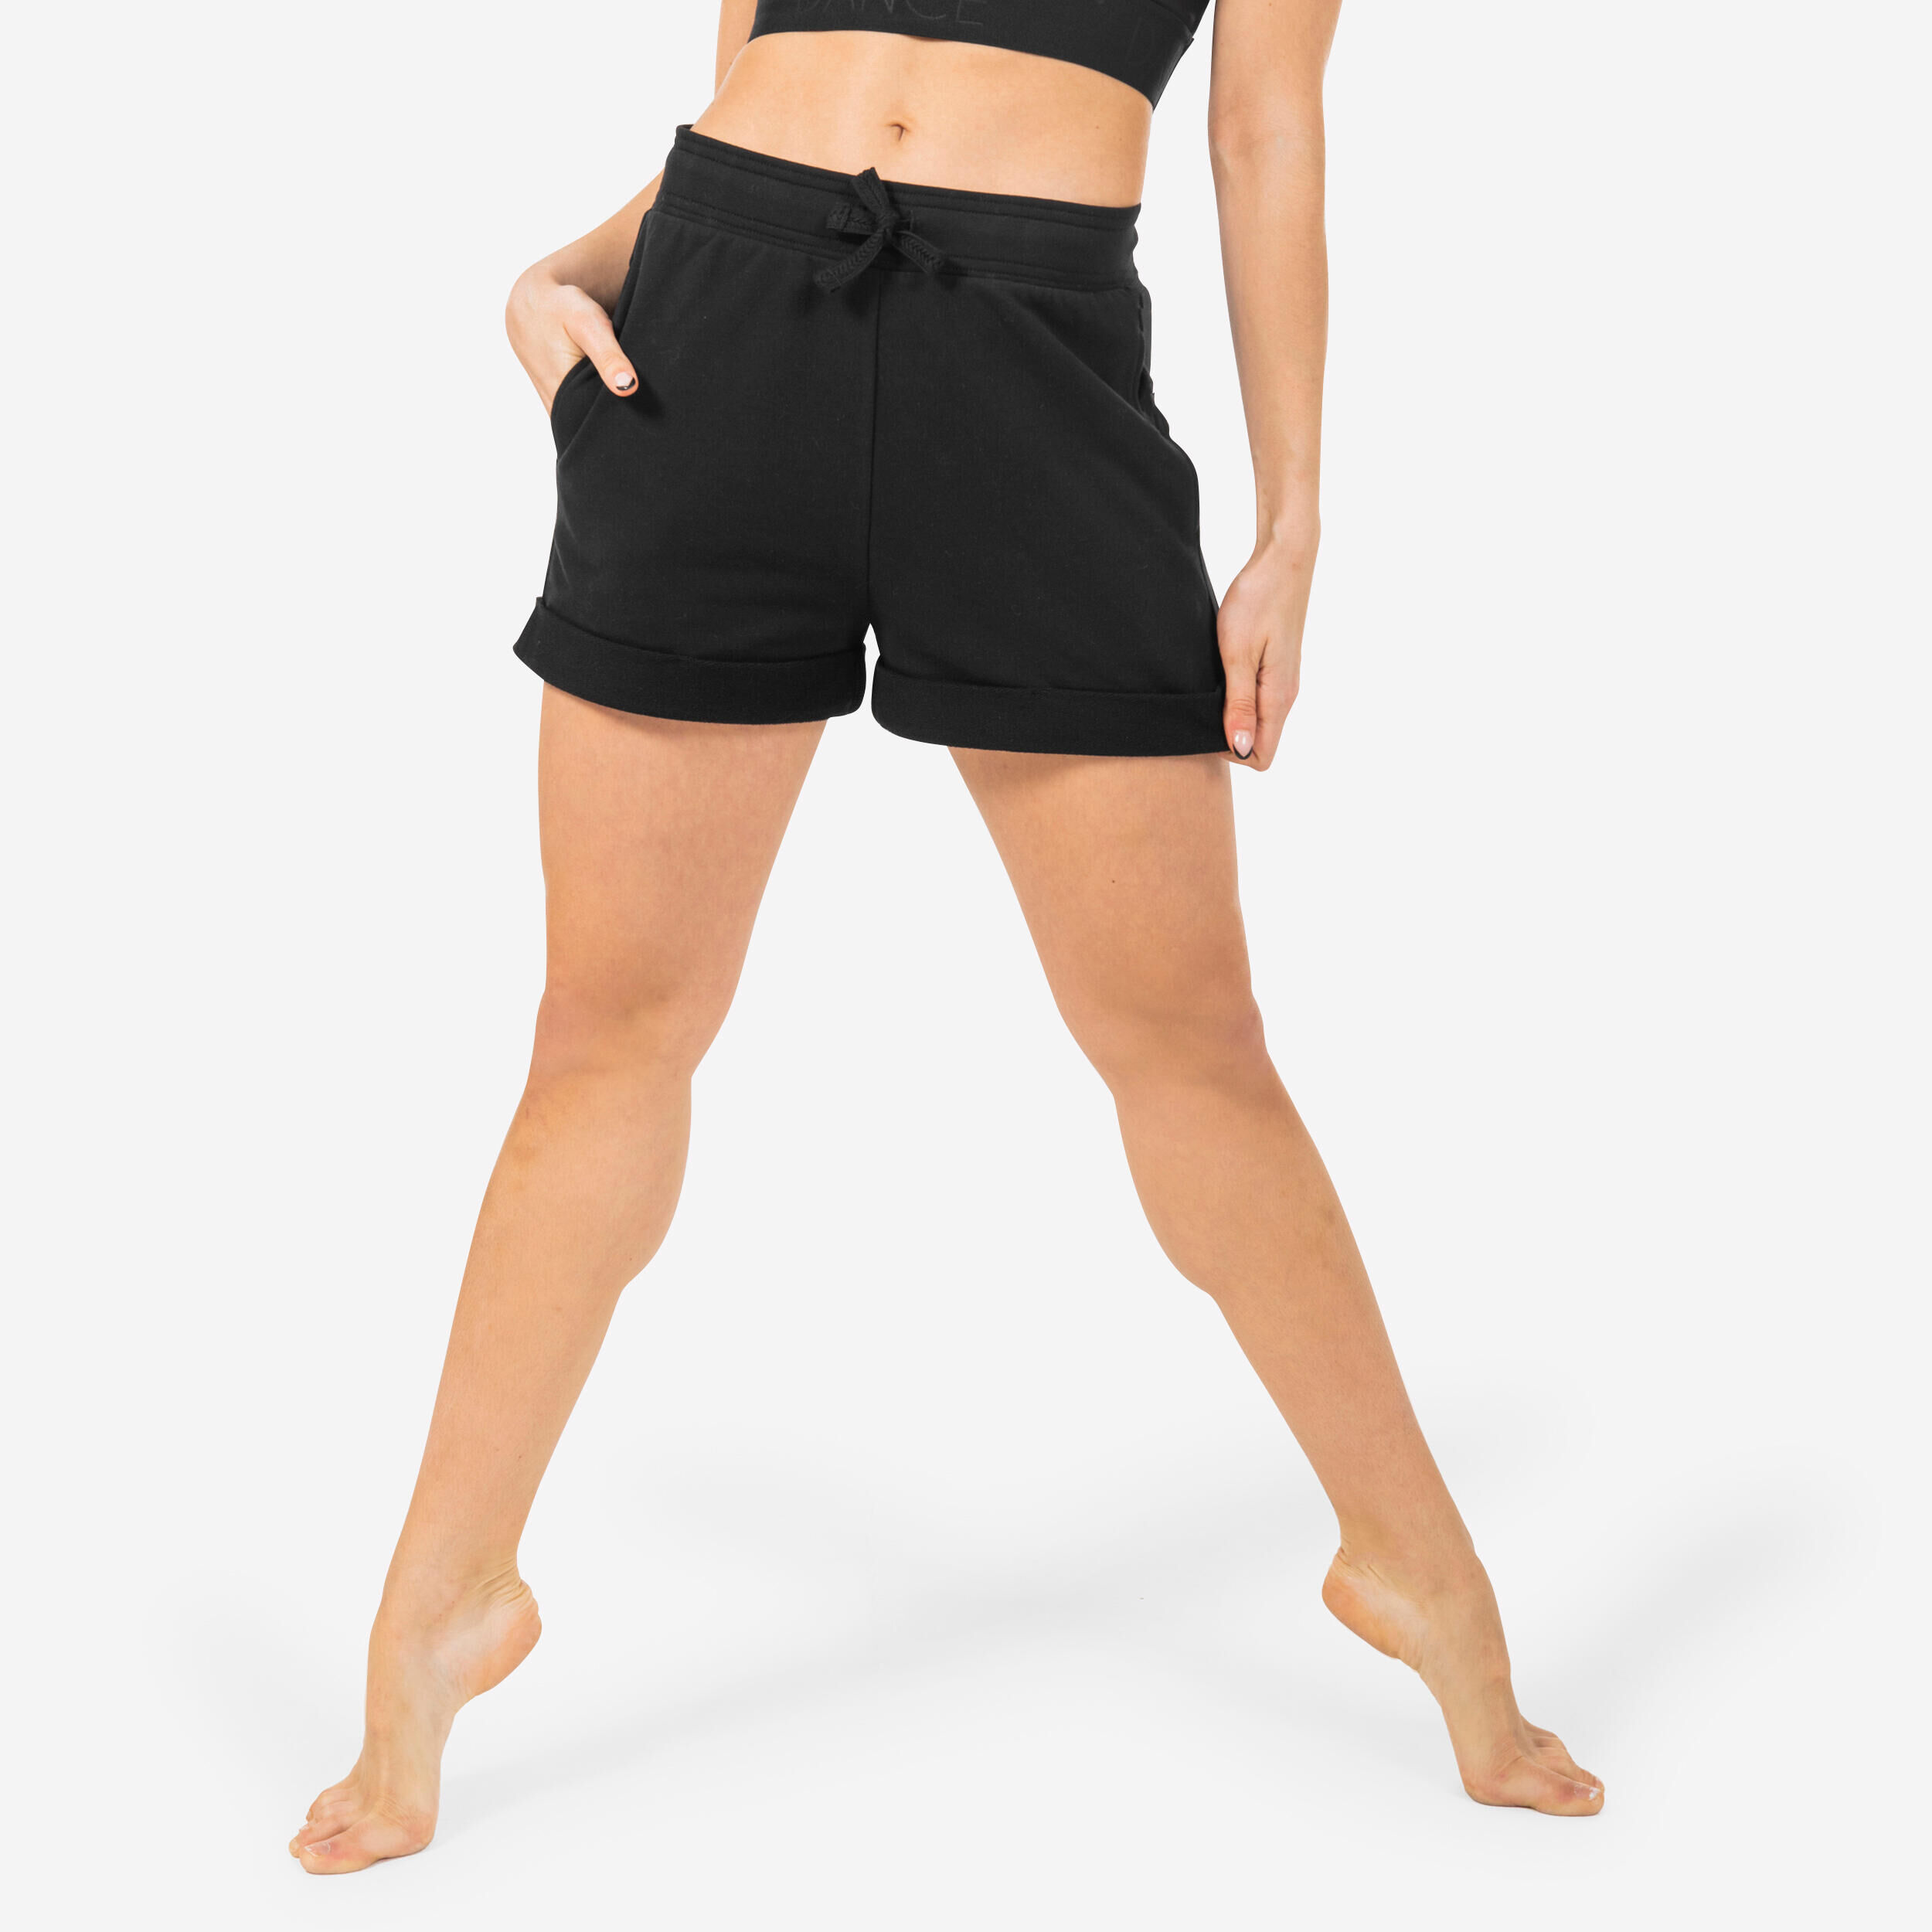 STAREVER Women's Modern Dance Loose-Fit Shorts - Black